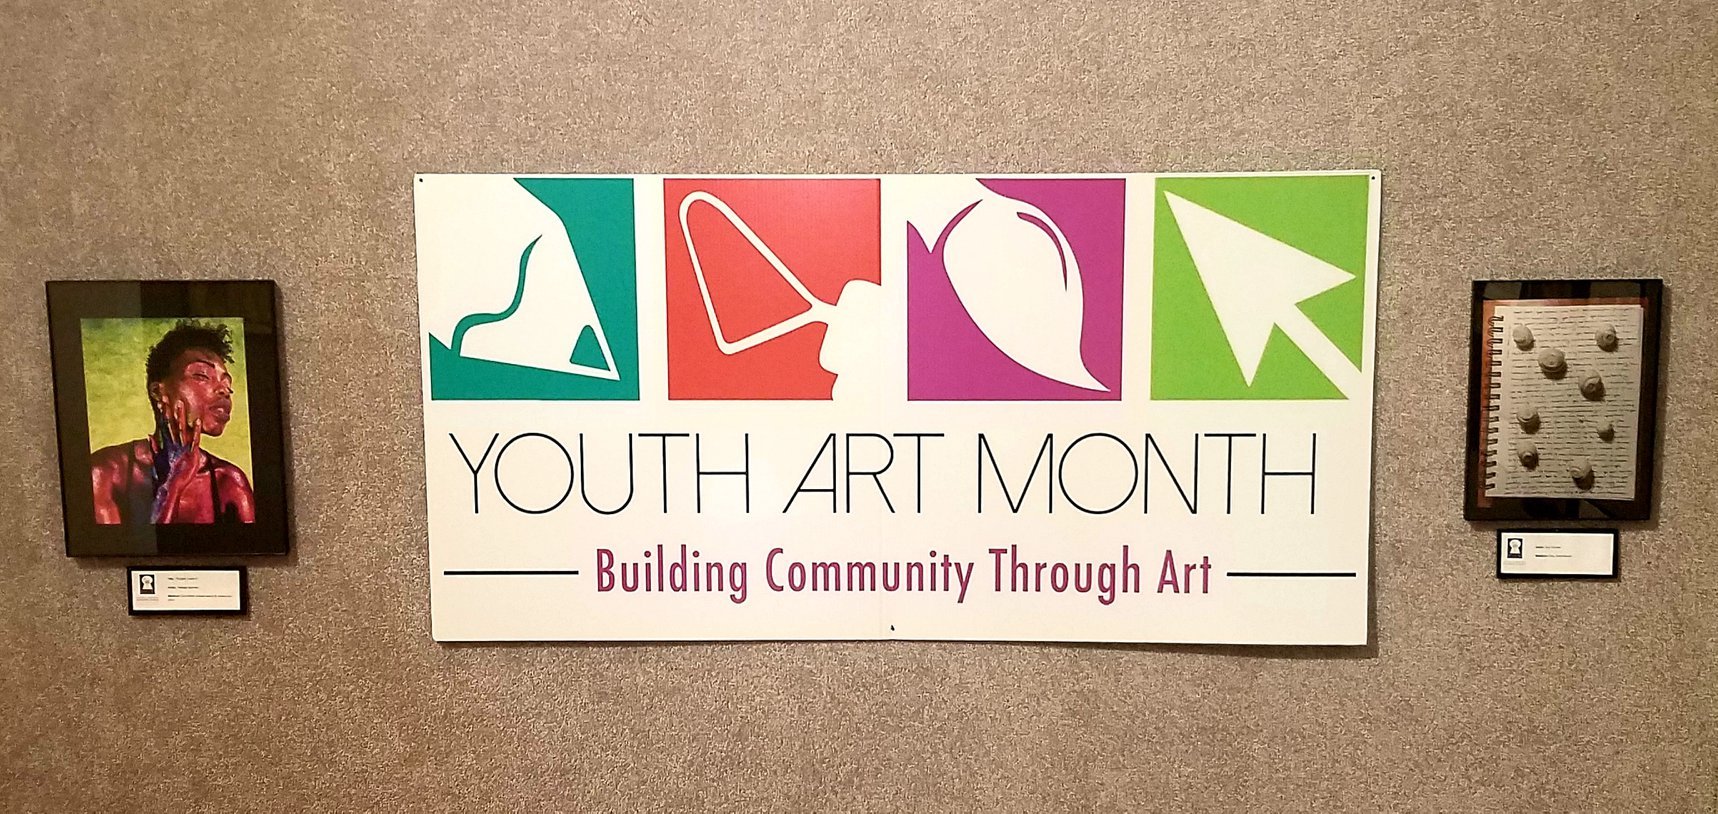 Youth Art Month.jpg